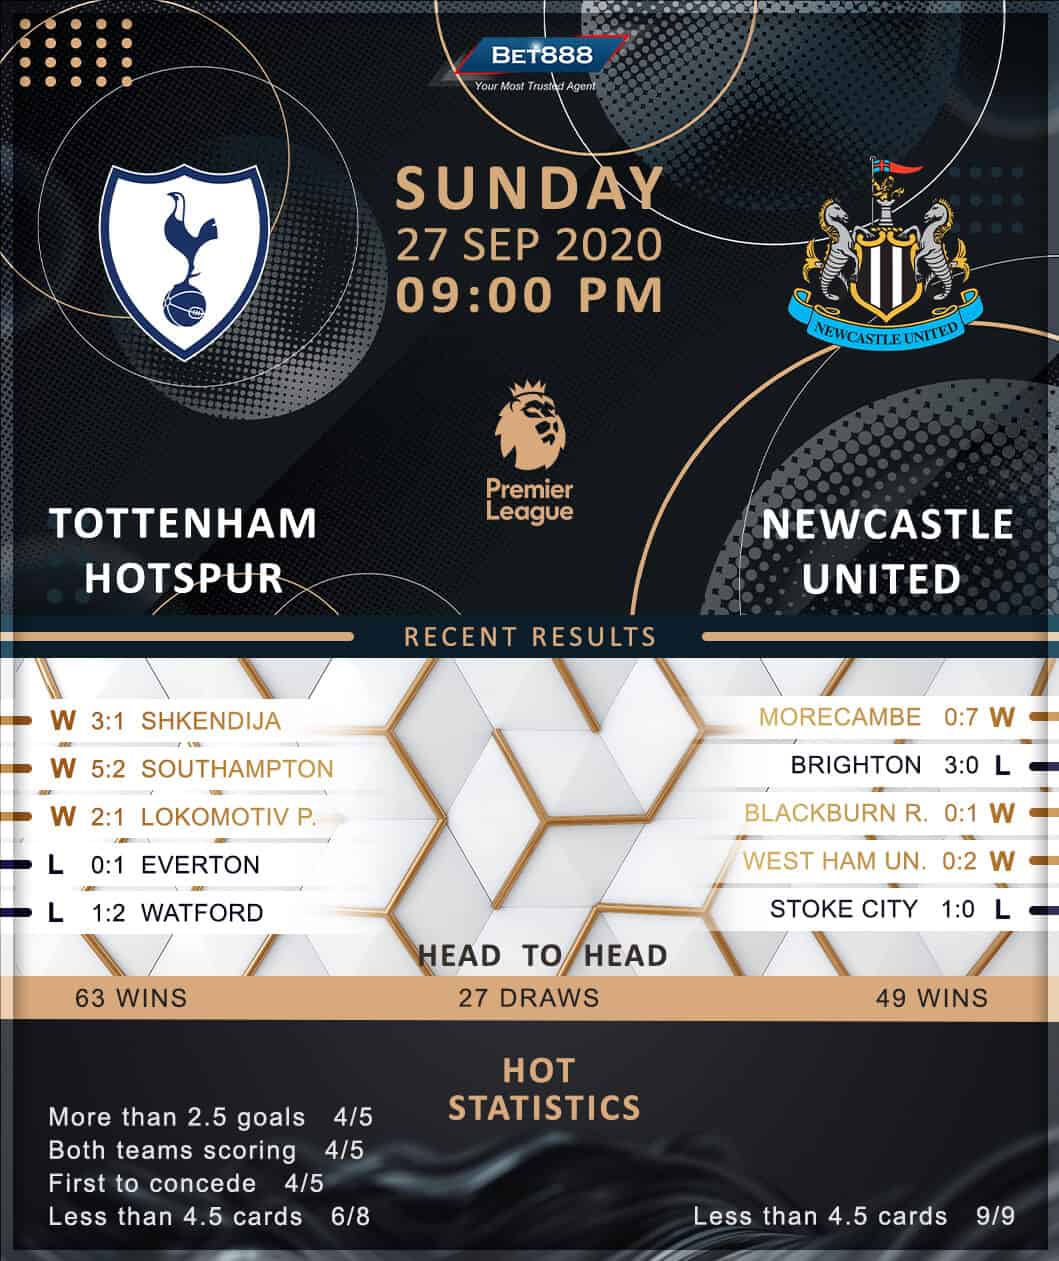 Tottenham Hotspur vs Newcastle United 27/09/20